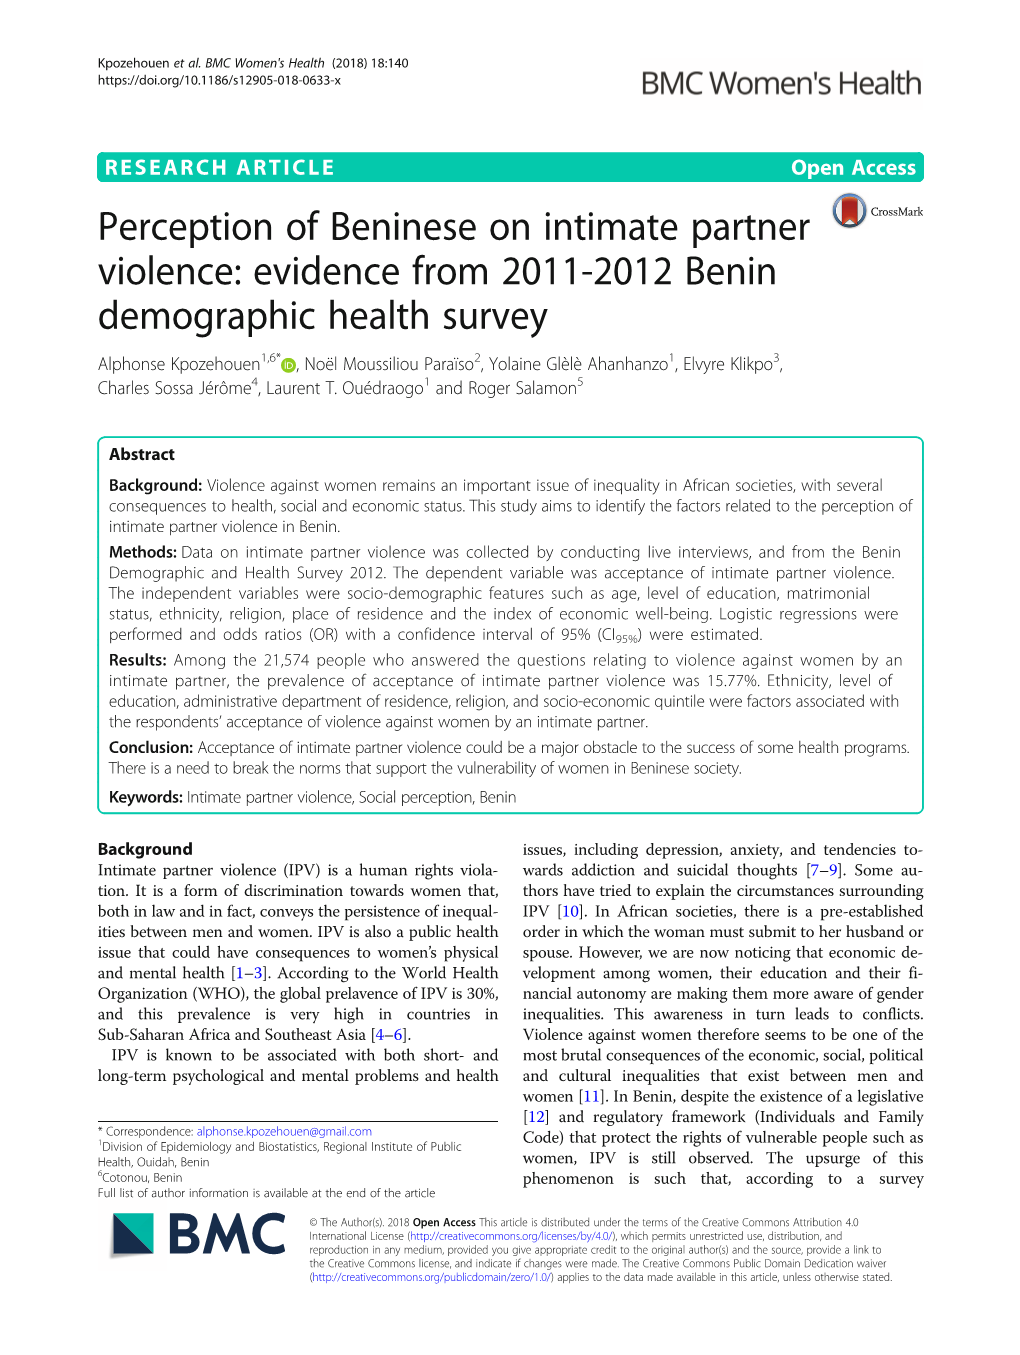 Perception of Beninese on Intimate Partner Violence: Evidence from 2011-2012 Benin Demographic Health Survey